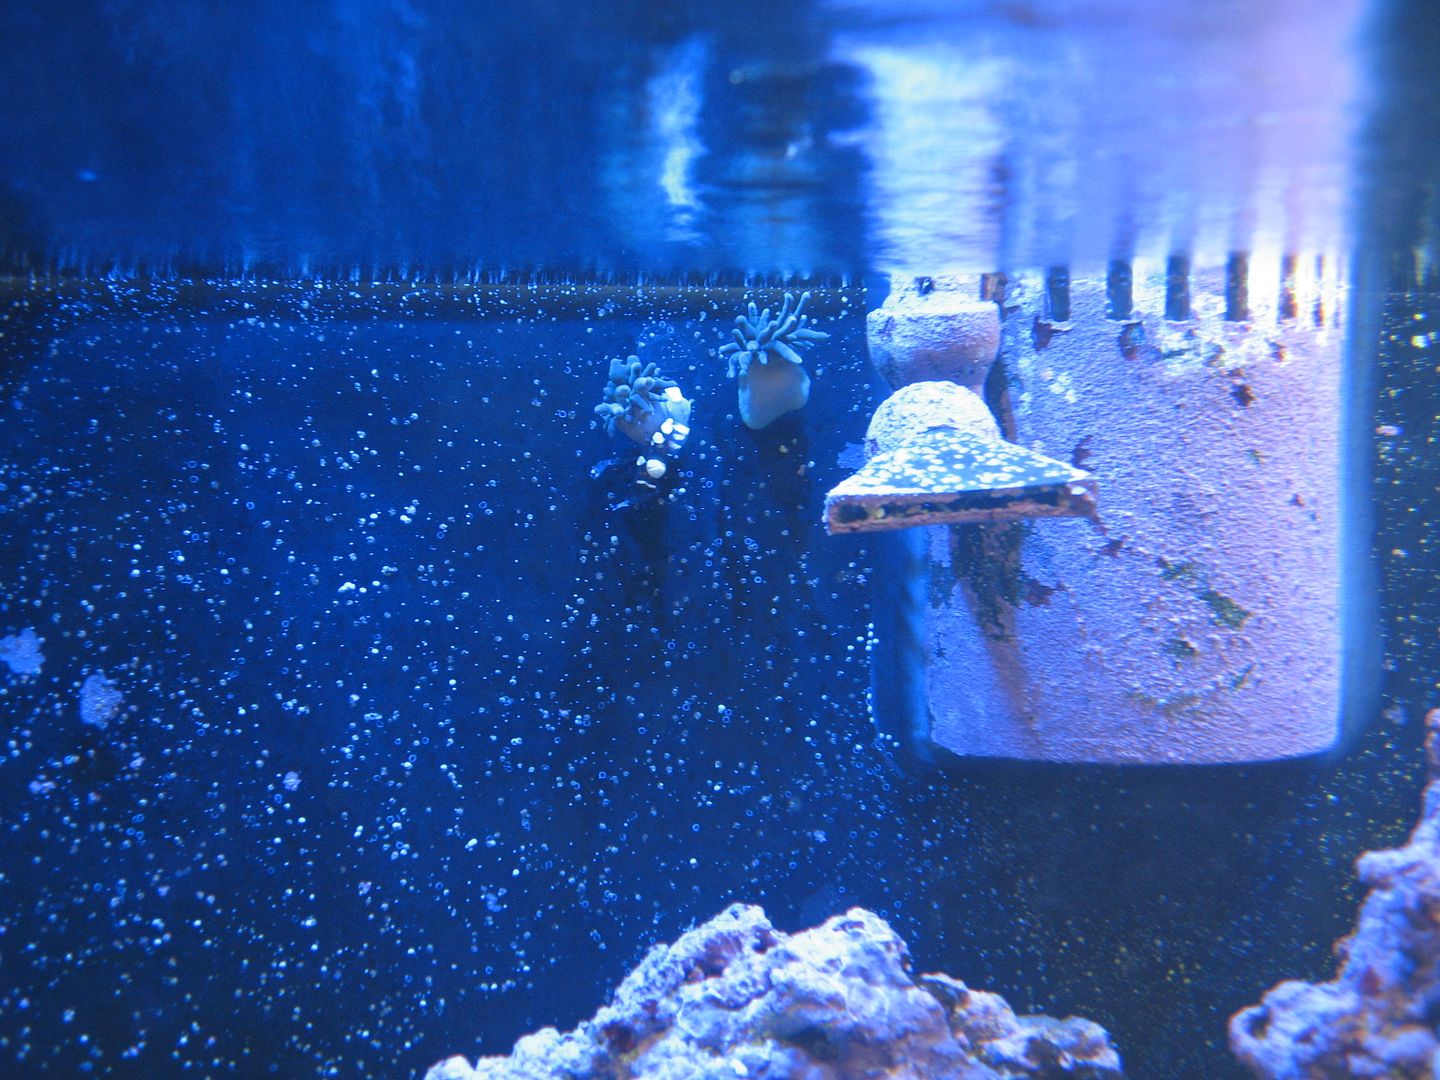 Aquarium_PeacockTailOnBTAclones_25AUG2012_zpsbf2dbf46.jpg